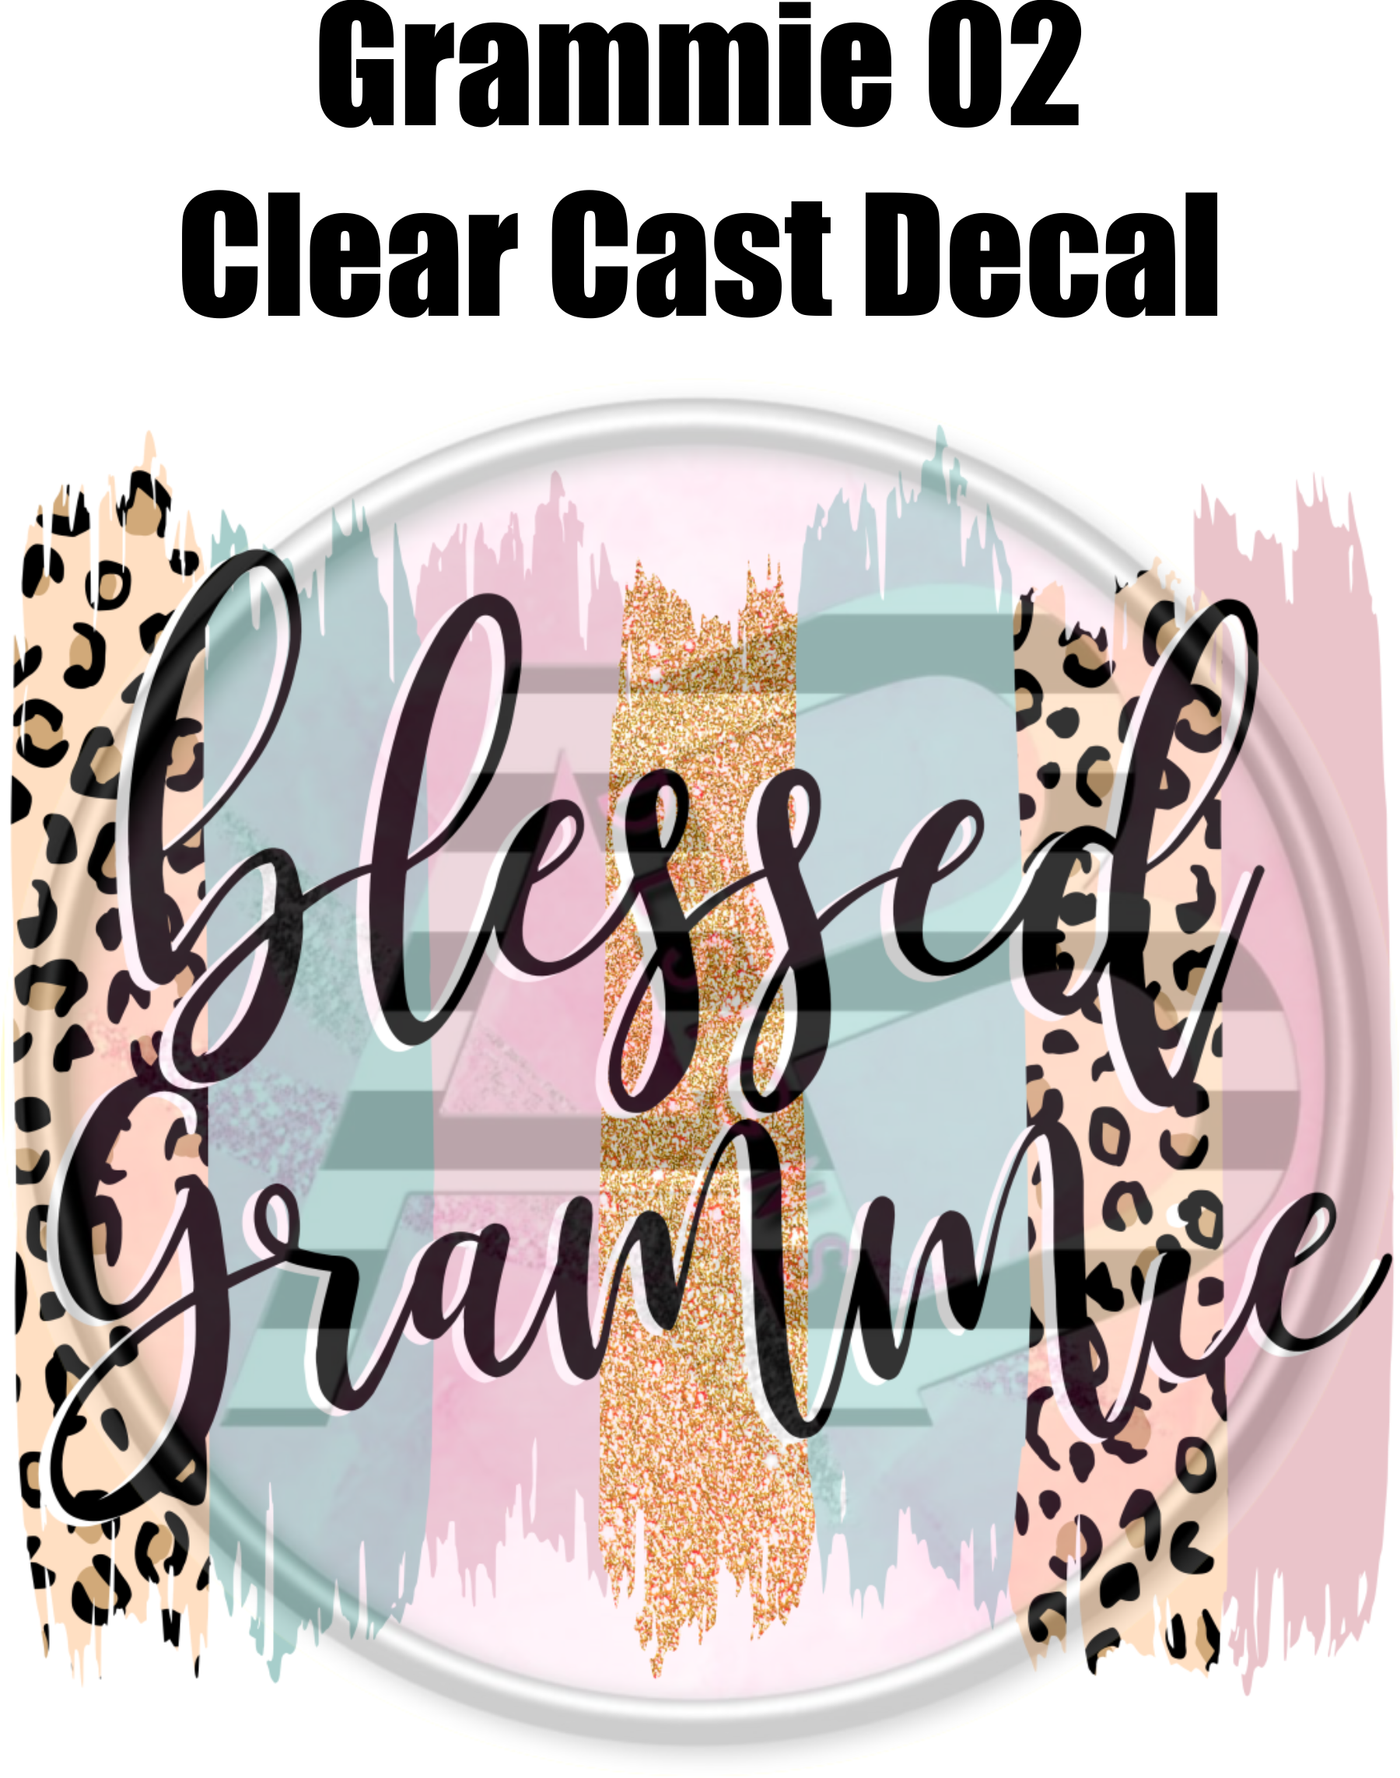 Grammie 02 - Clear Cast Decal